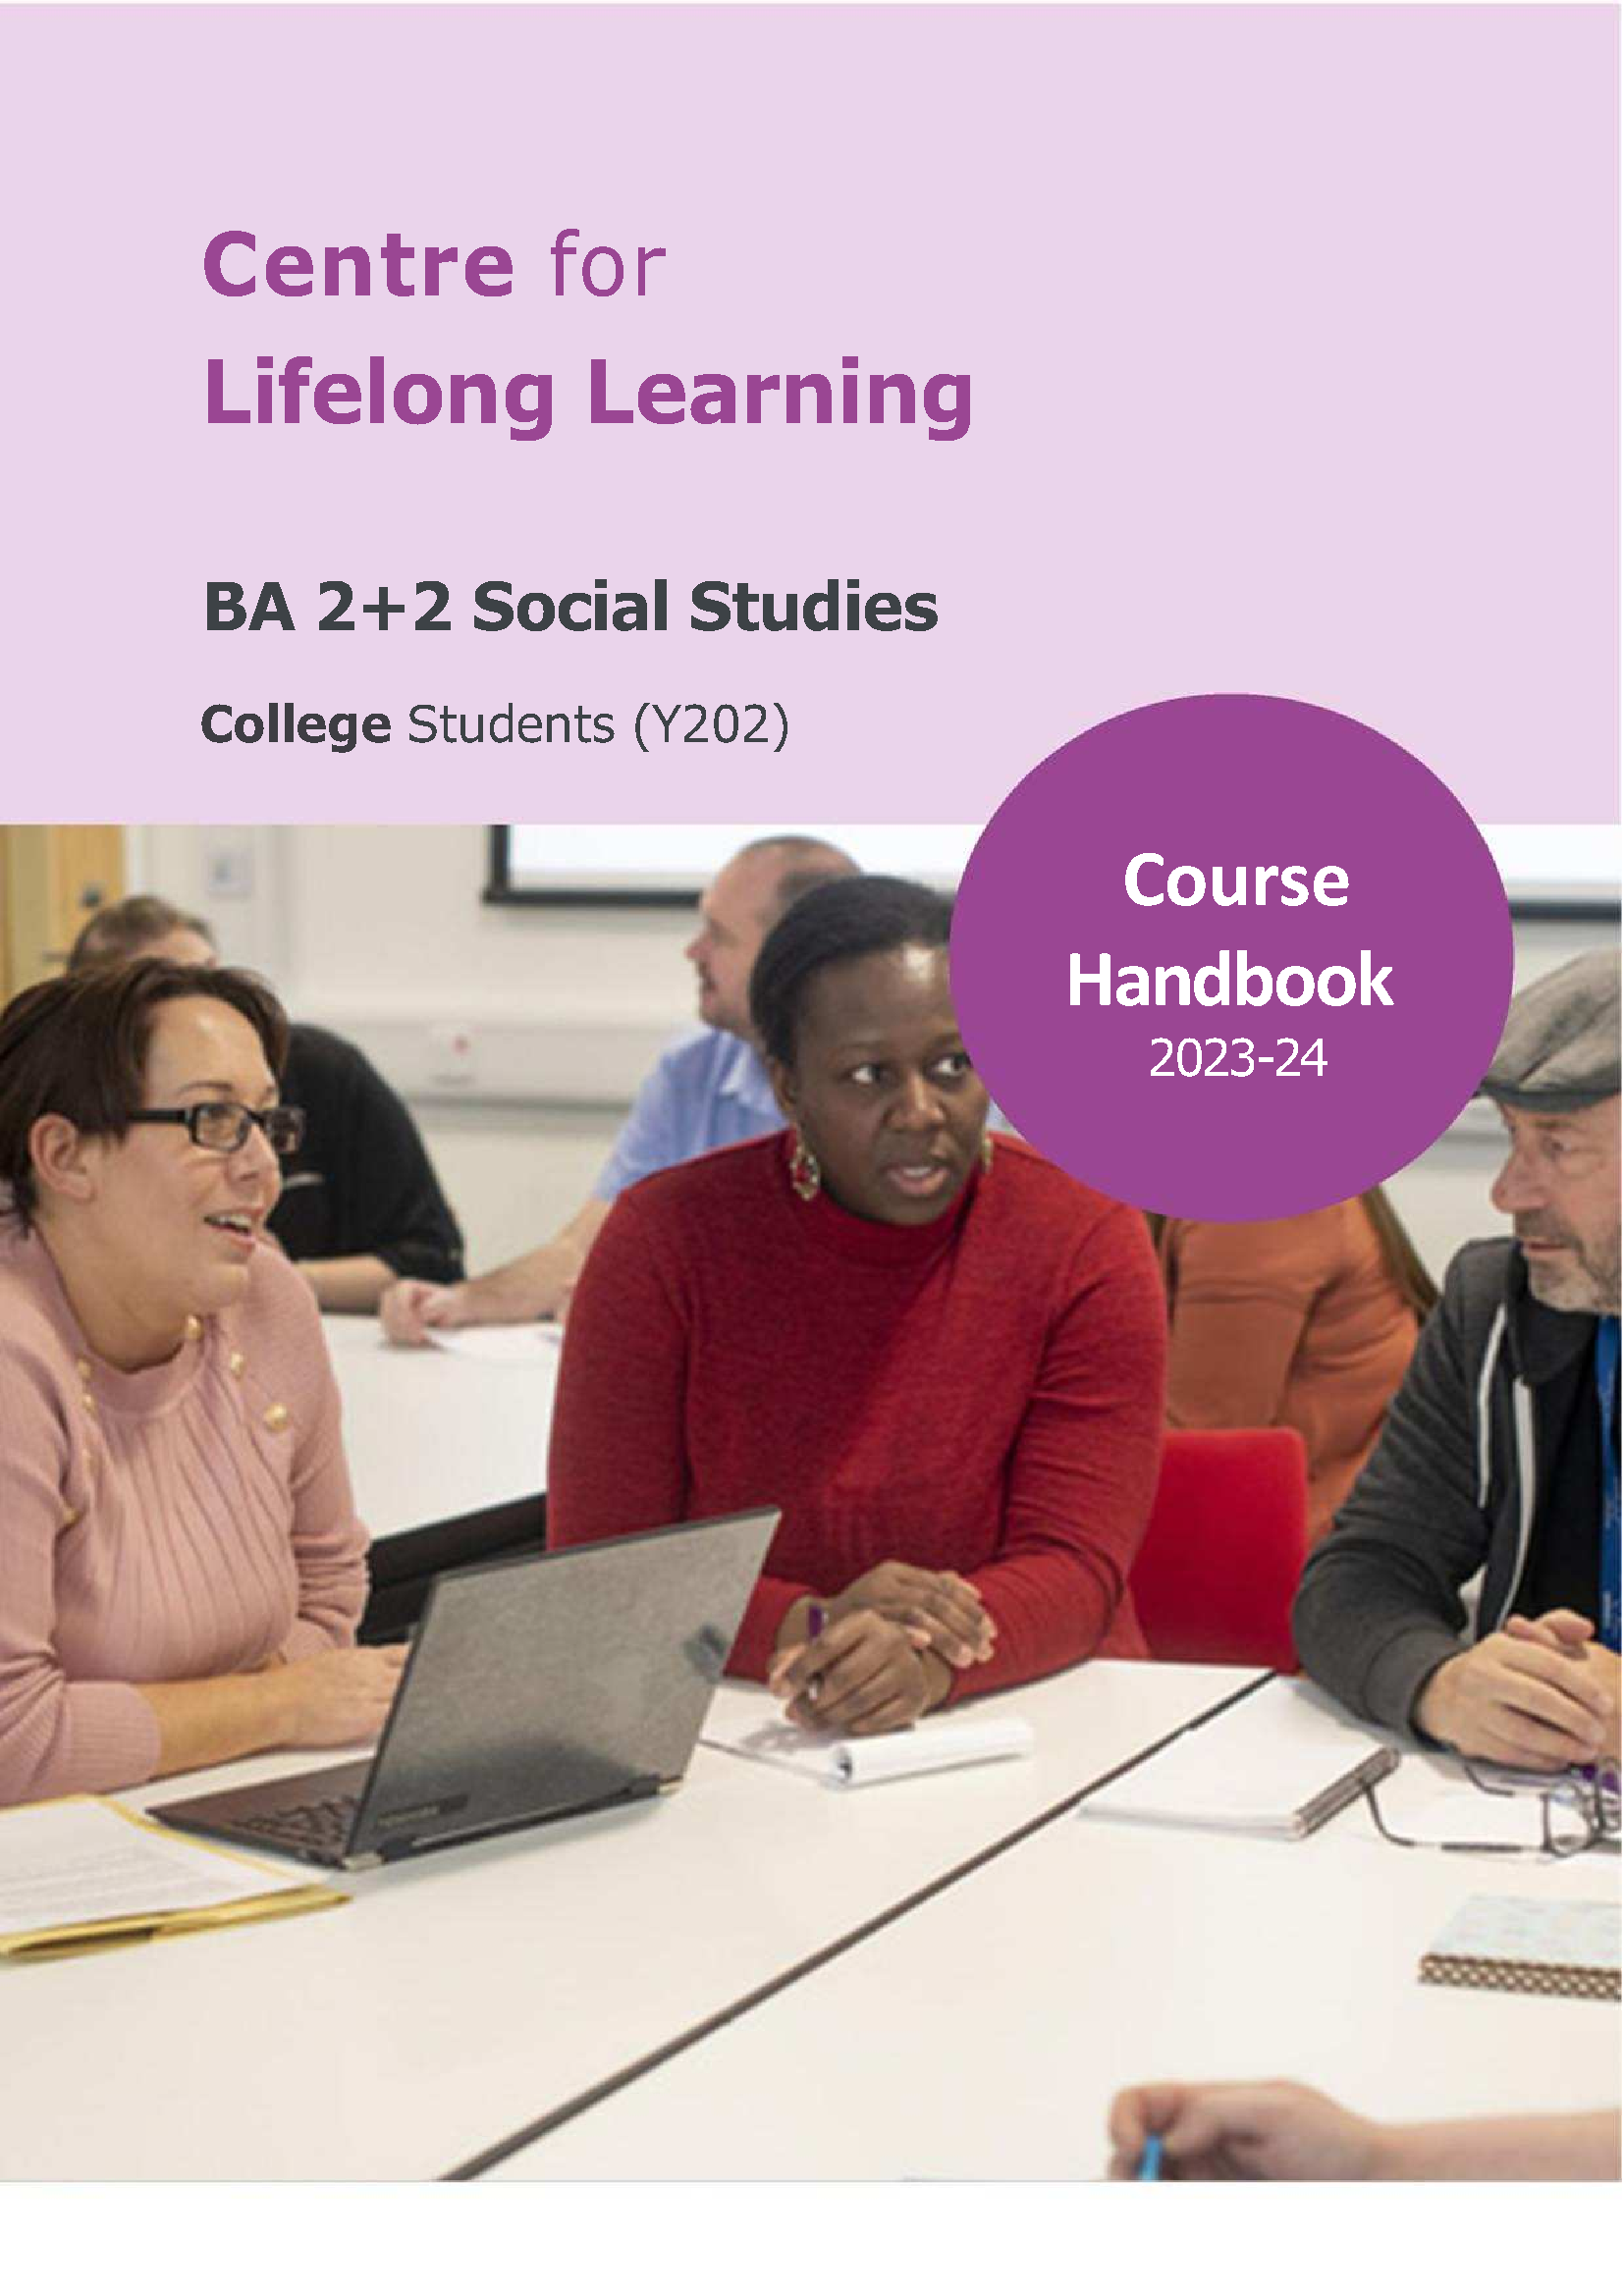 BA 2+2 Social Studies Handbook, Front Cover